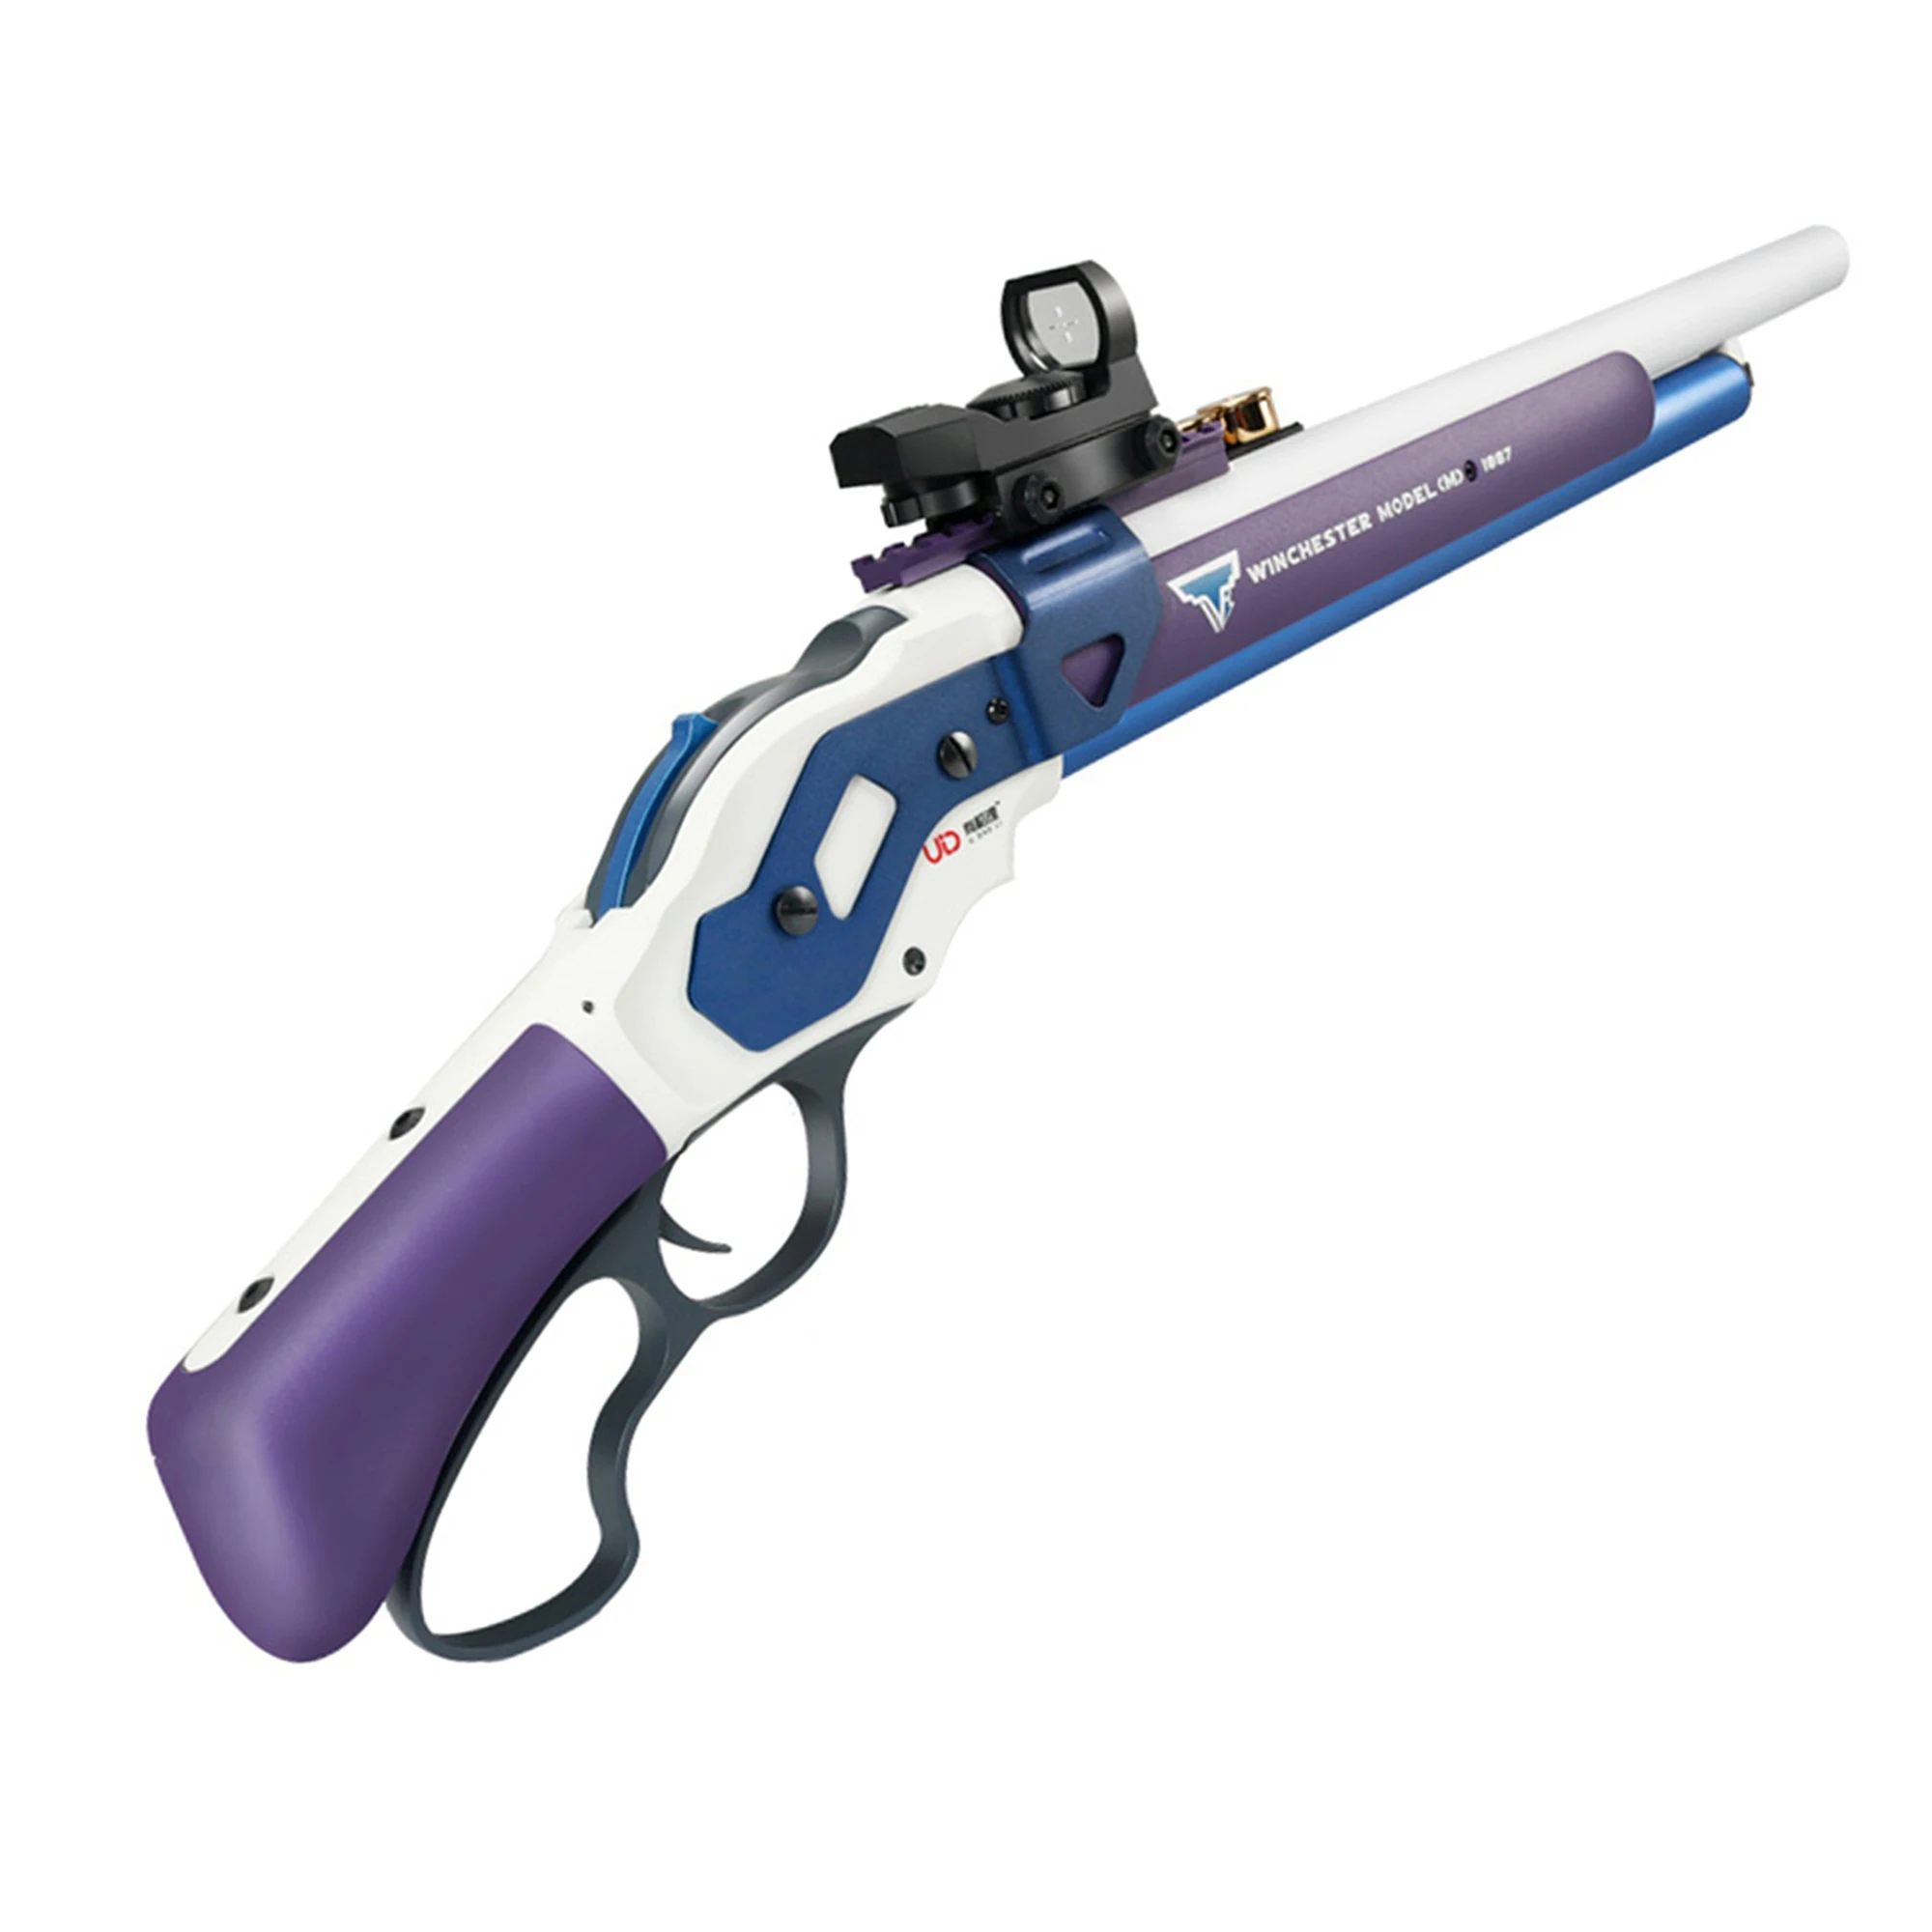 

M1887 Gun Airsoft Shell Throwing Soft Bullet Gun Weapon For Shooting Paintball Traumat Pistol Machinegun Toys For Boys